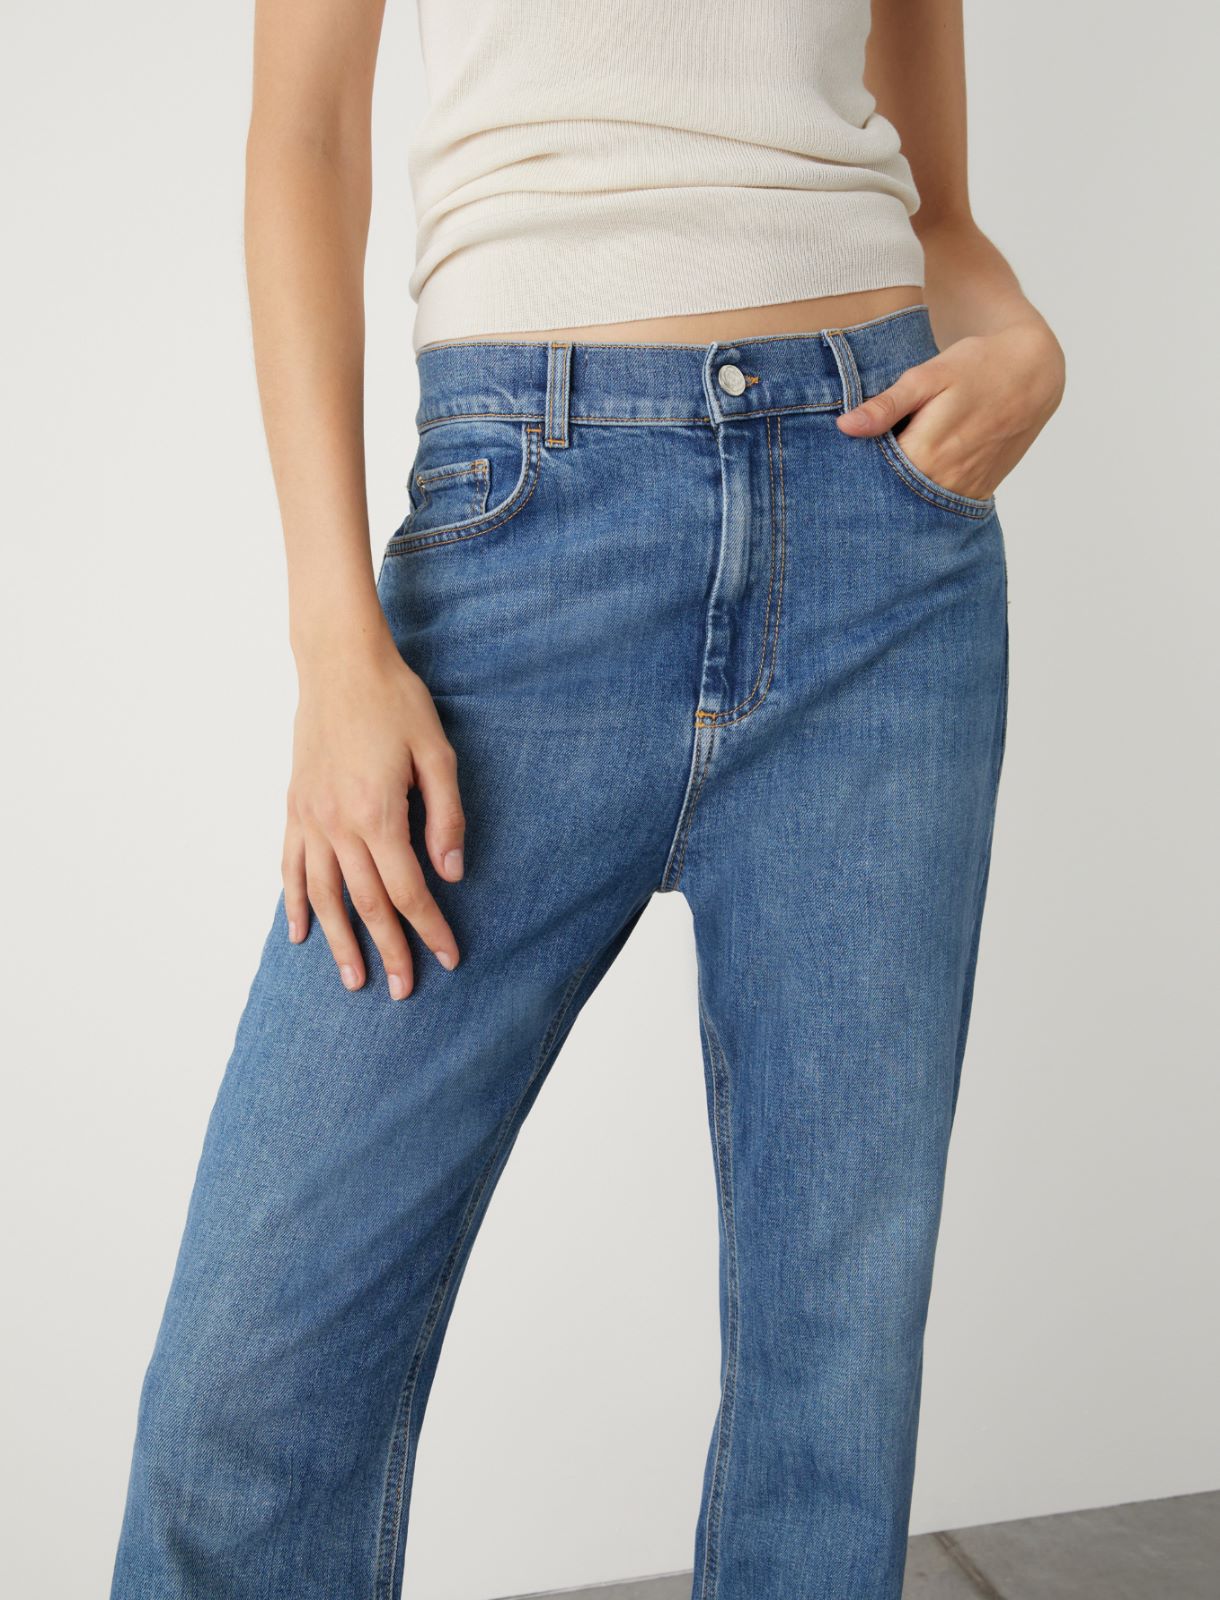 Jean taille haute - Bleu jeans - Marella - 4